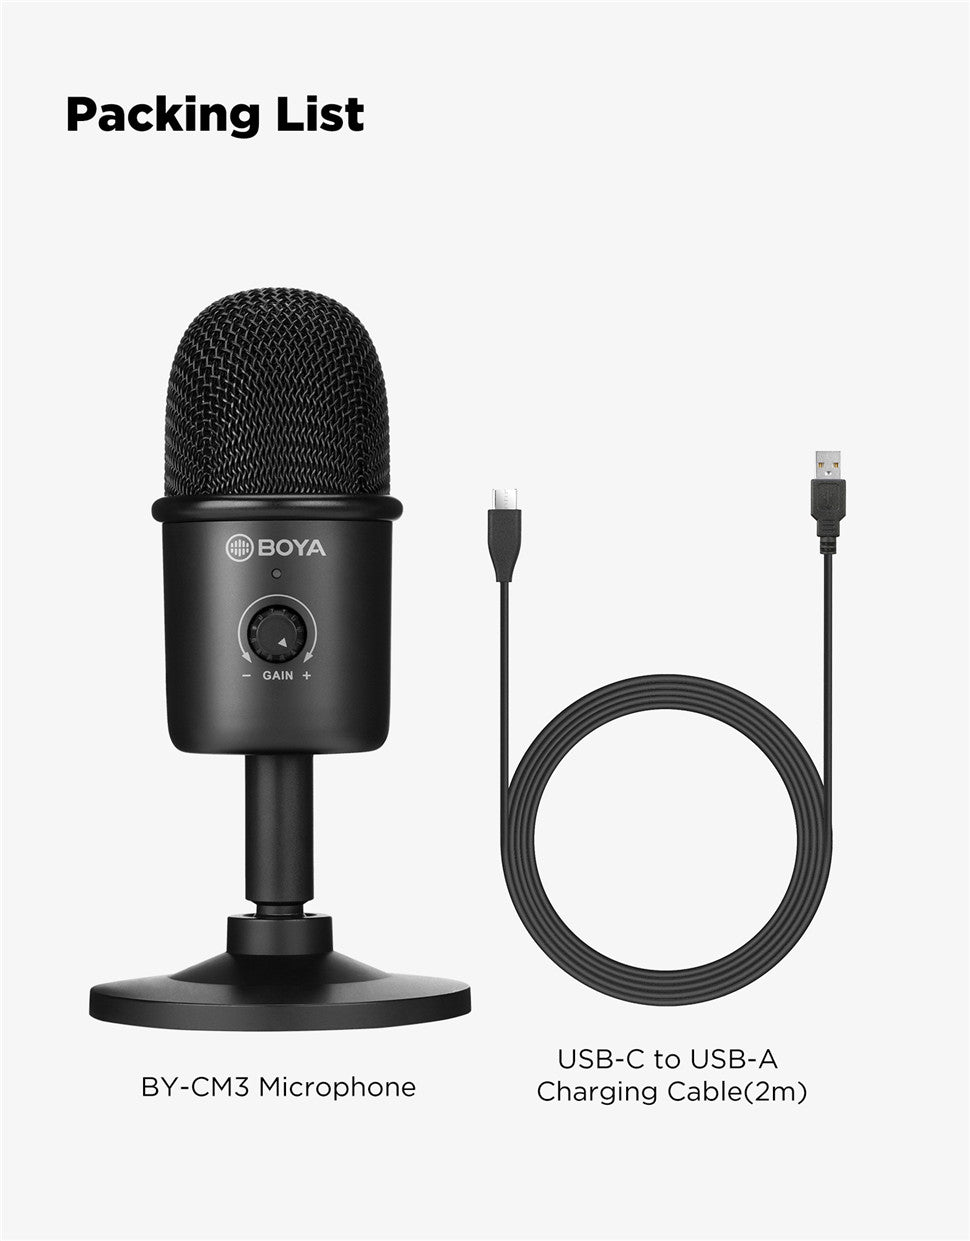 BOYA BY-CM3 USB Desktop Condenser Microphone